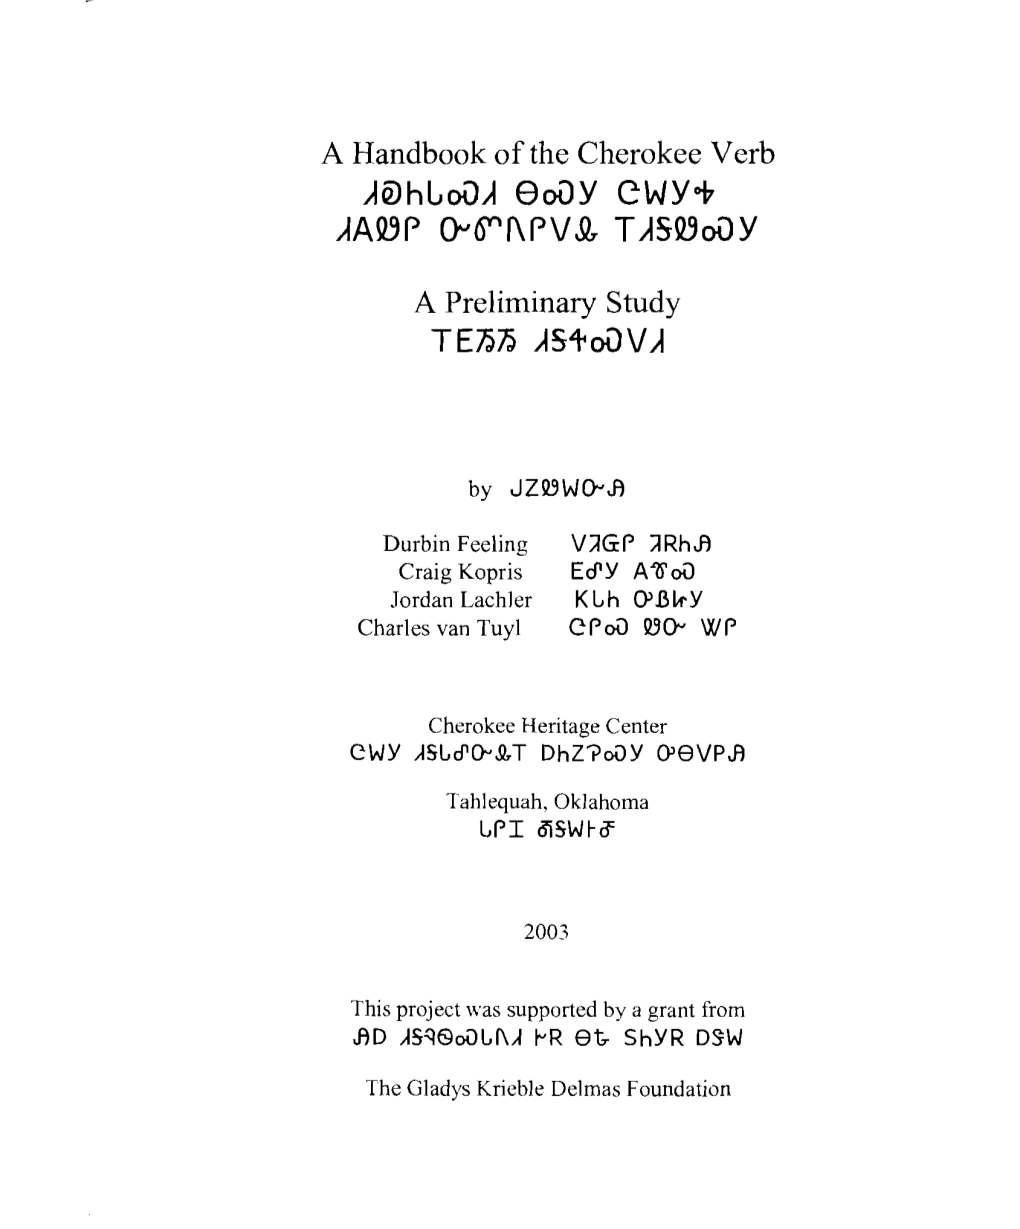 Handbook of the Cherokee Verb A9hlda 8Dy CWY+ AADP Ovitilpvl!, Tafddy